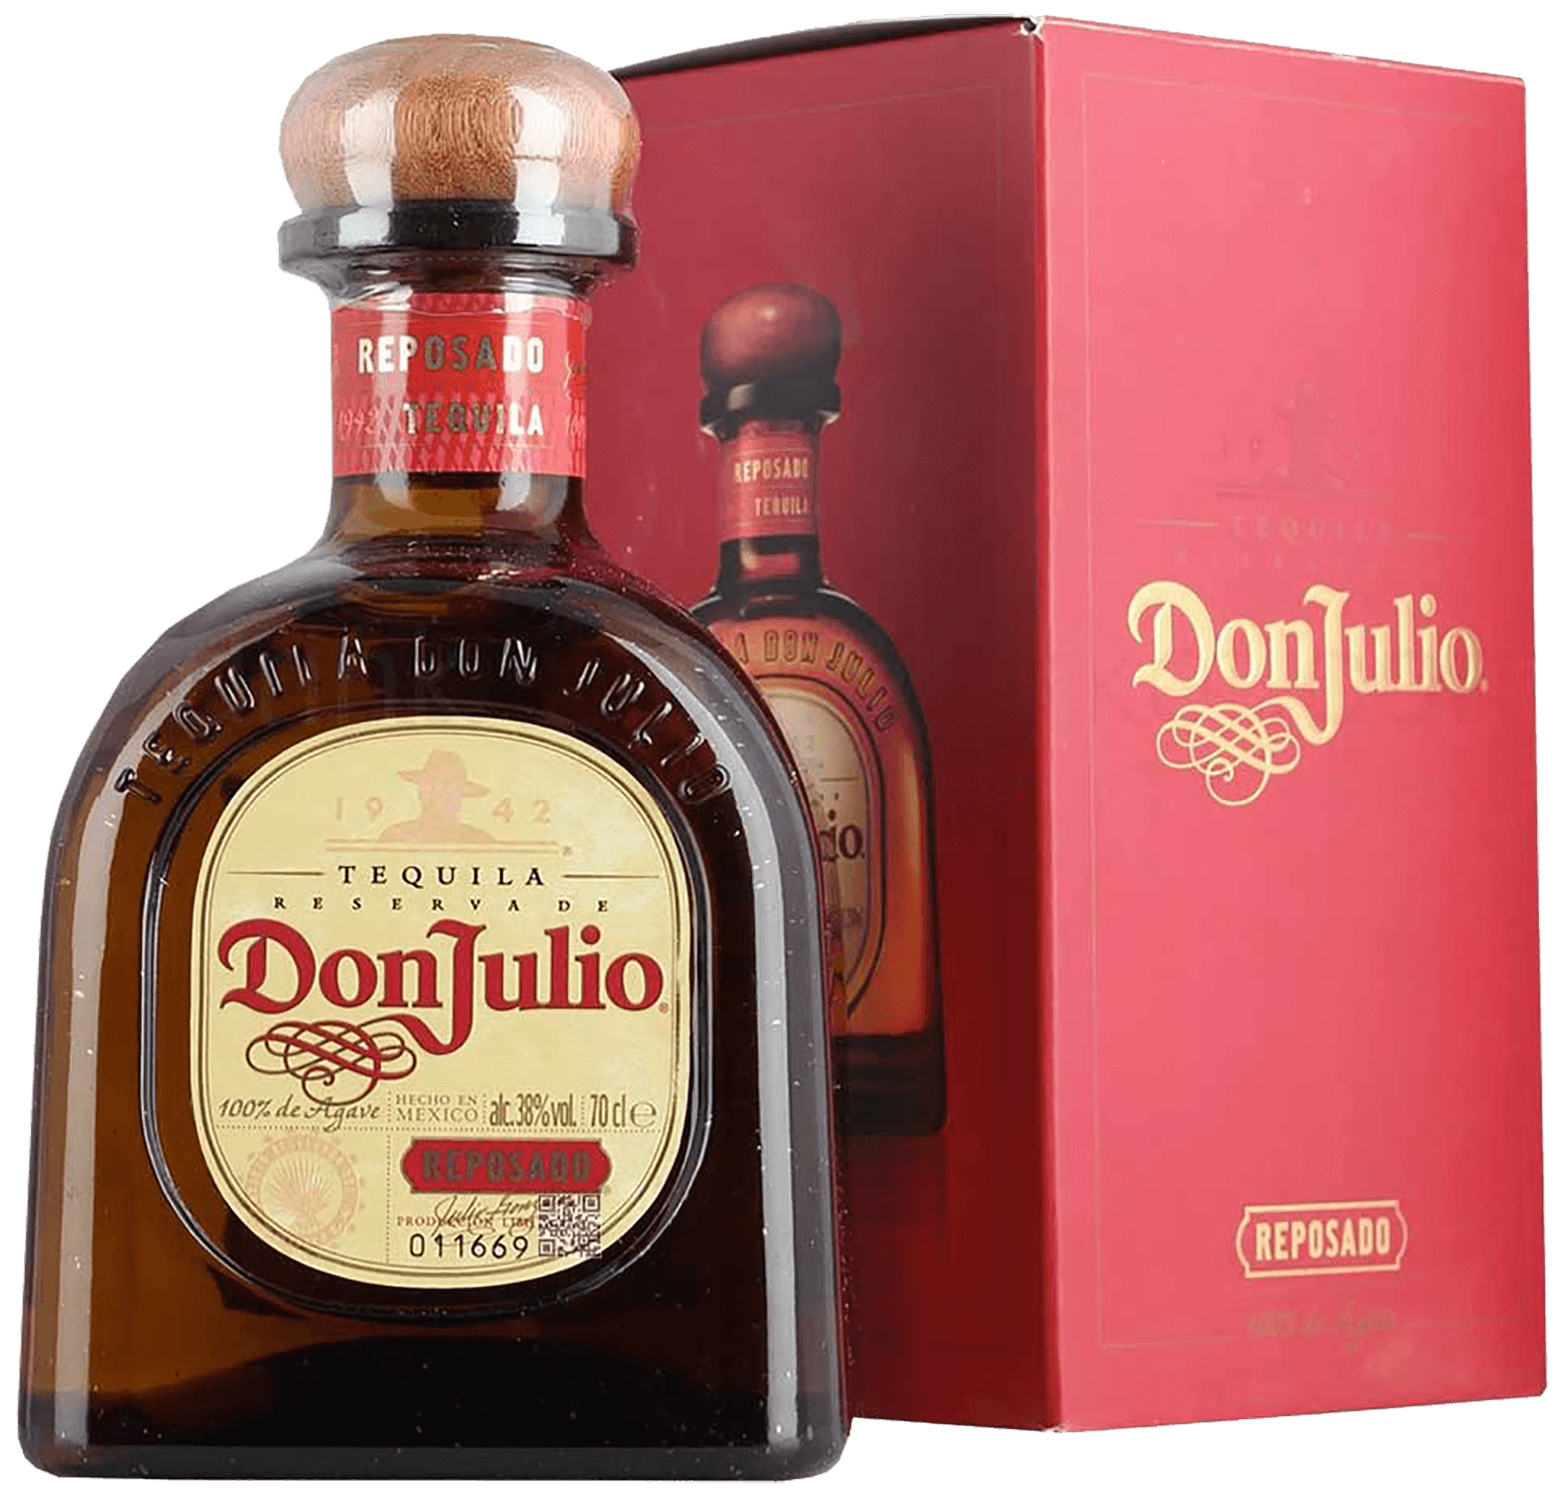 Don Julio Reposado (gift box) don chicho reposado tequila gift box